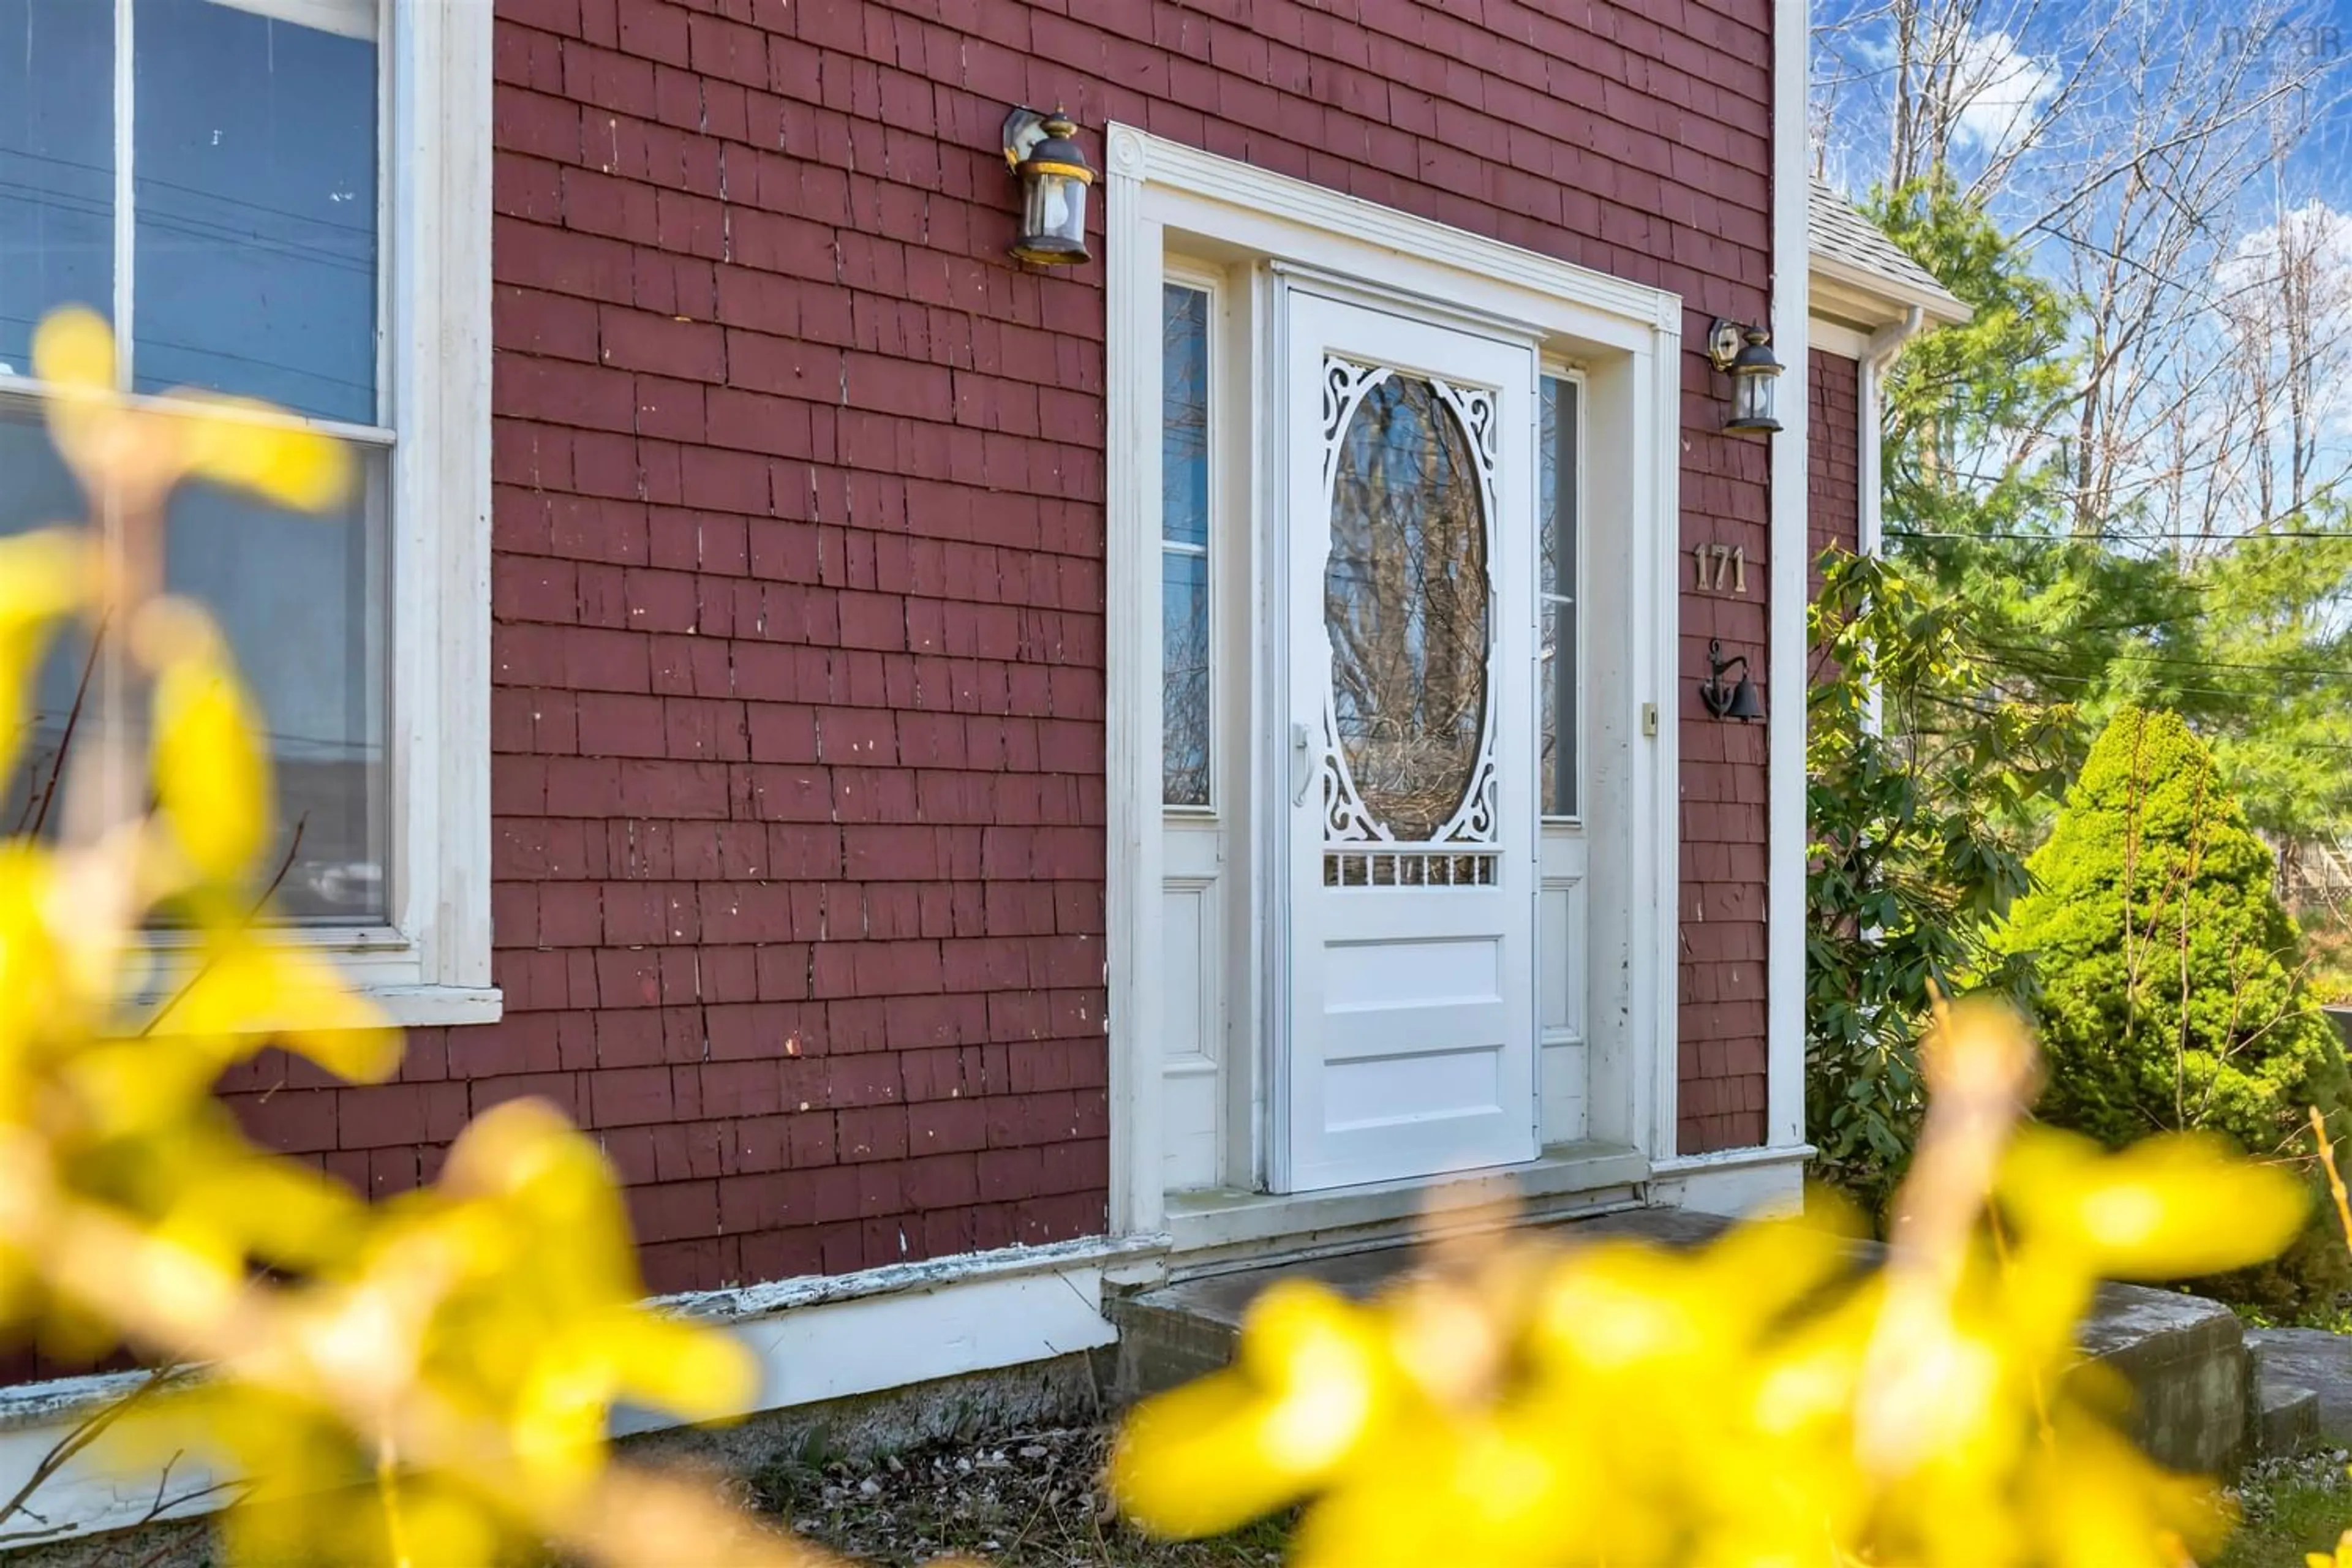 Home with brick exterior material for 171 Pleasant St, Bridgewater Nova Scotia B4V 1N4